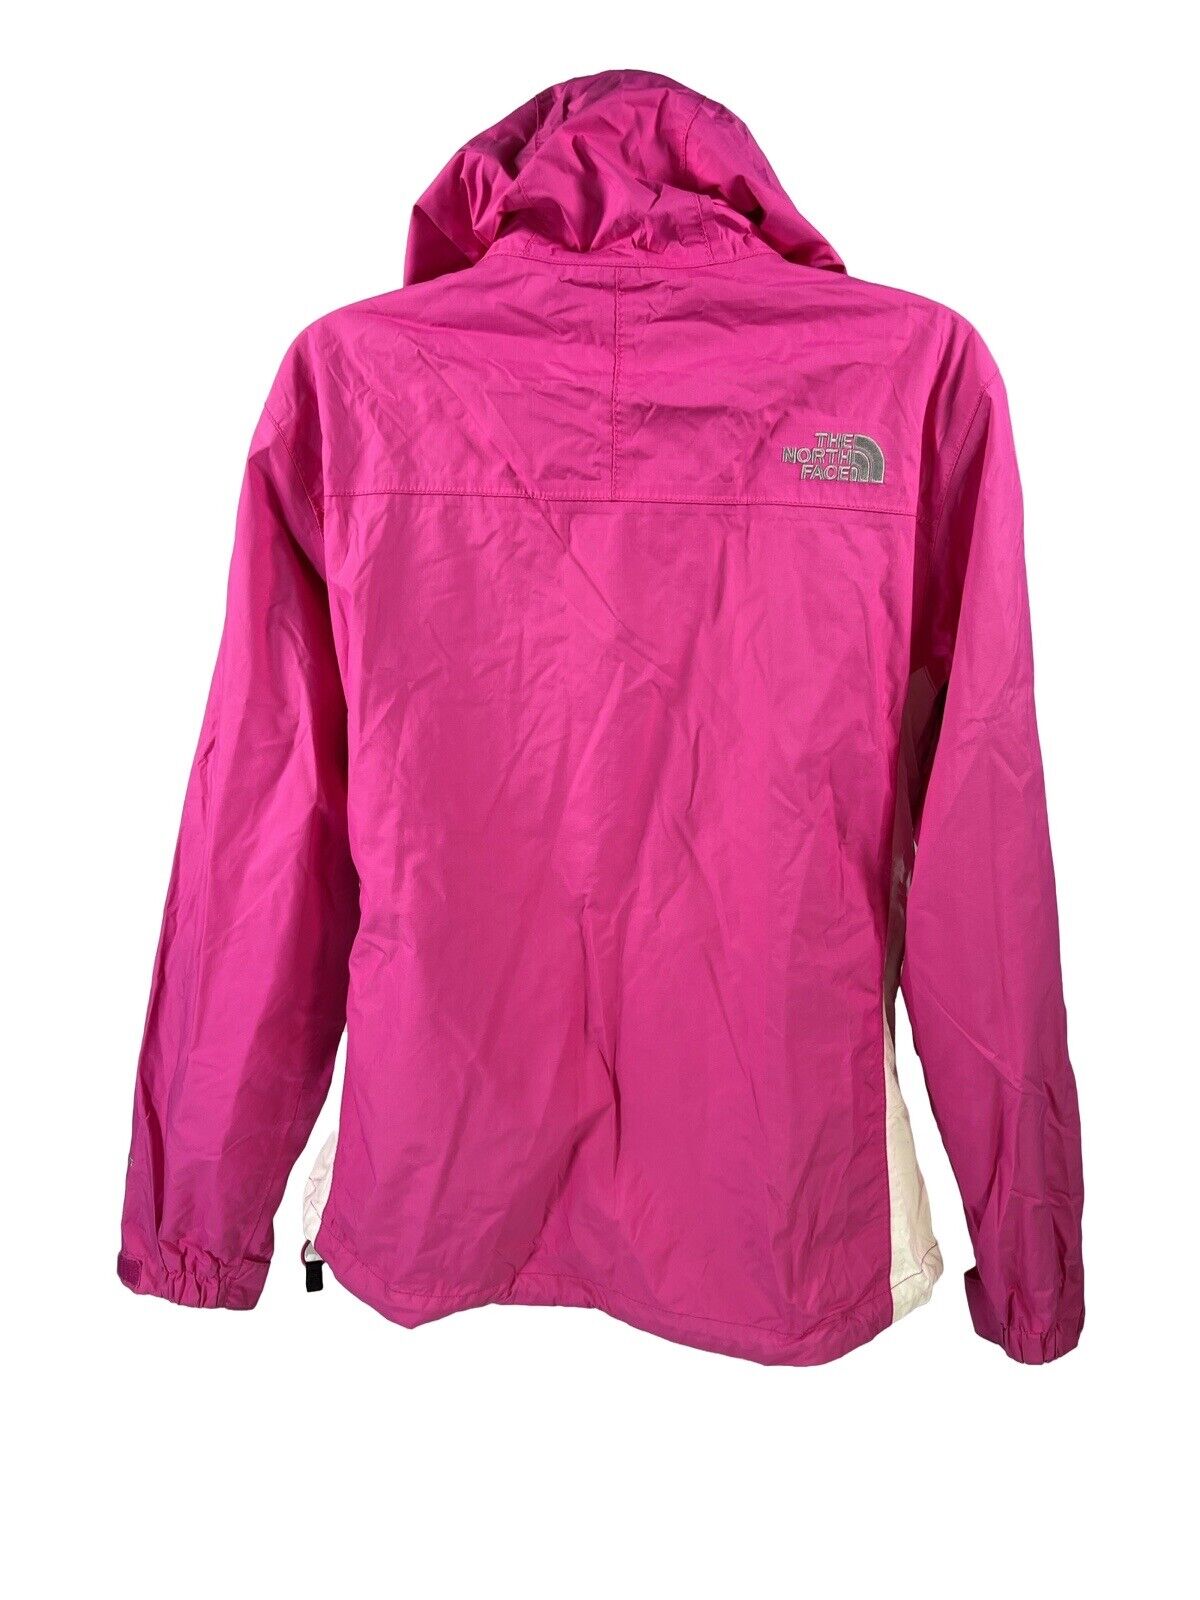 The North Face Women's Pink/White Full Zip Windbreaker Jacket - S